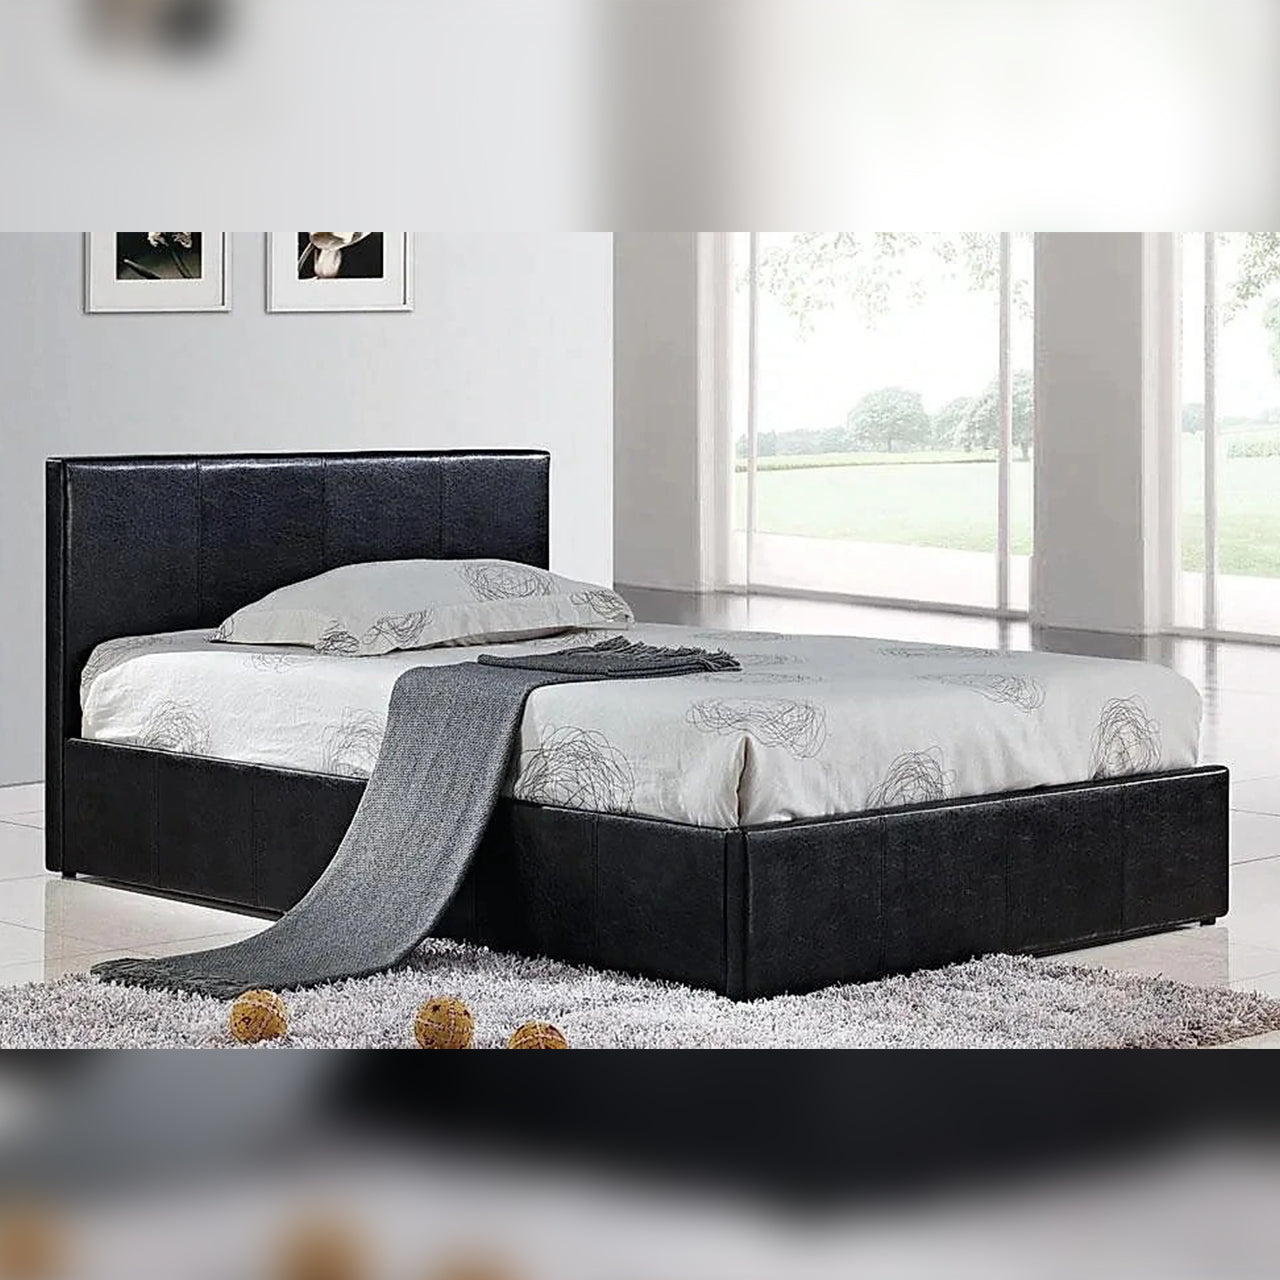 Single Bed Black leatherette Single Bed